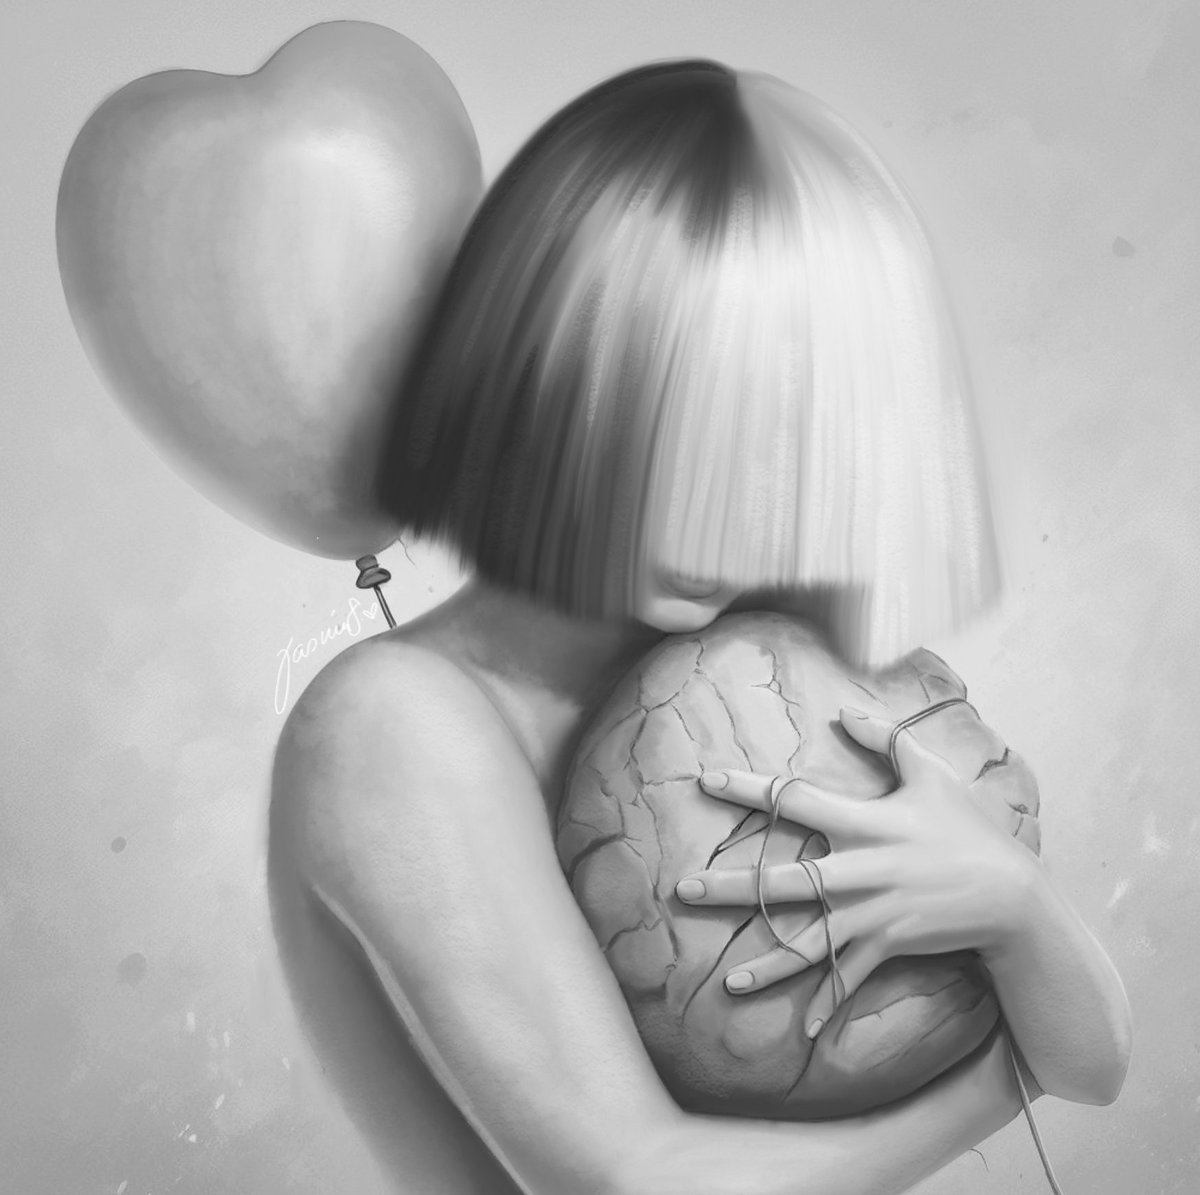 Rock and Balloon. 🪨🎈
#ReasonableWoman #rockandballoon @Sia